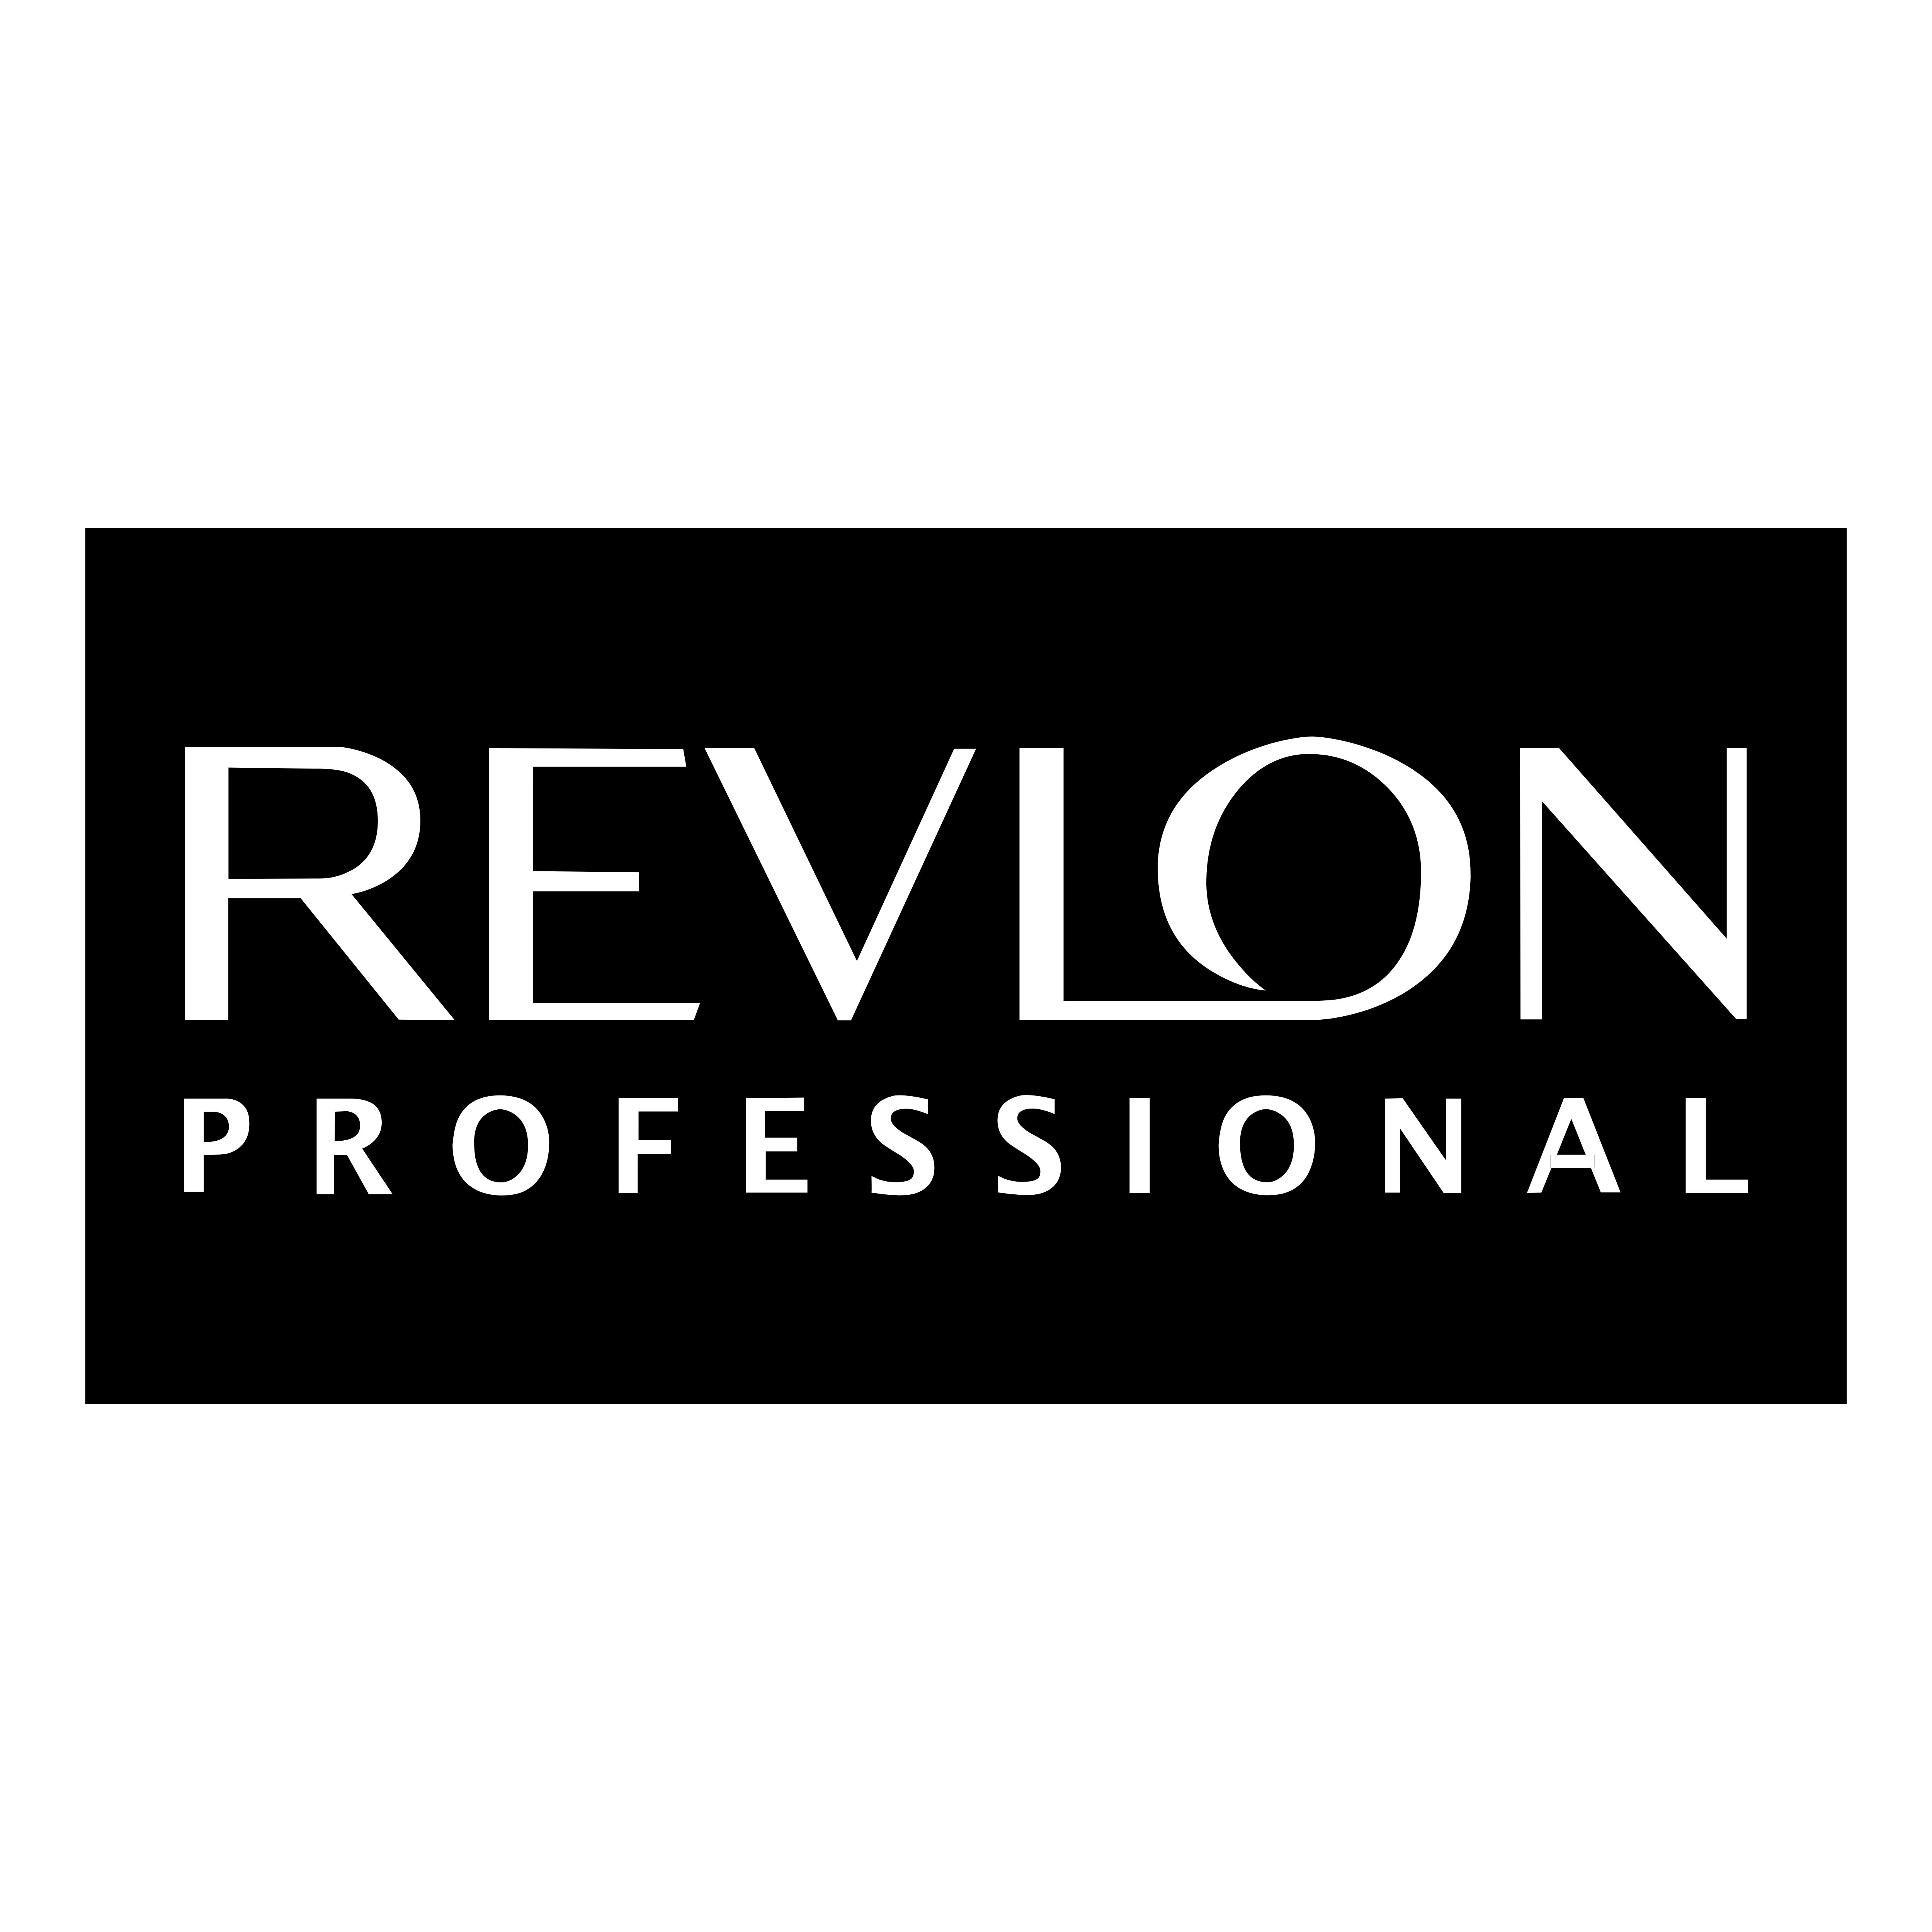 Revlon Logo - Revlon – Logos Download